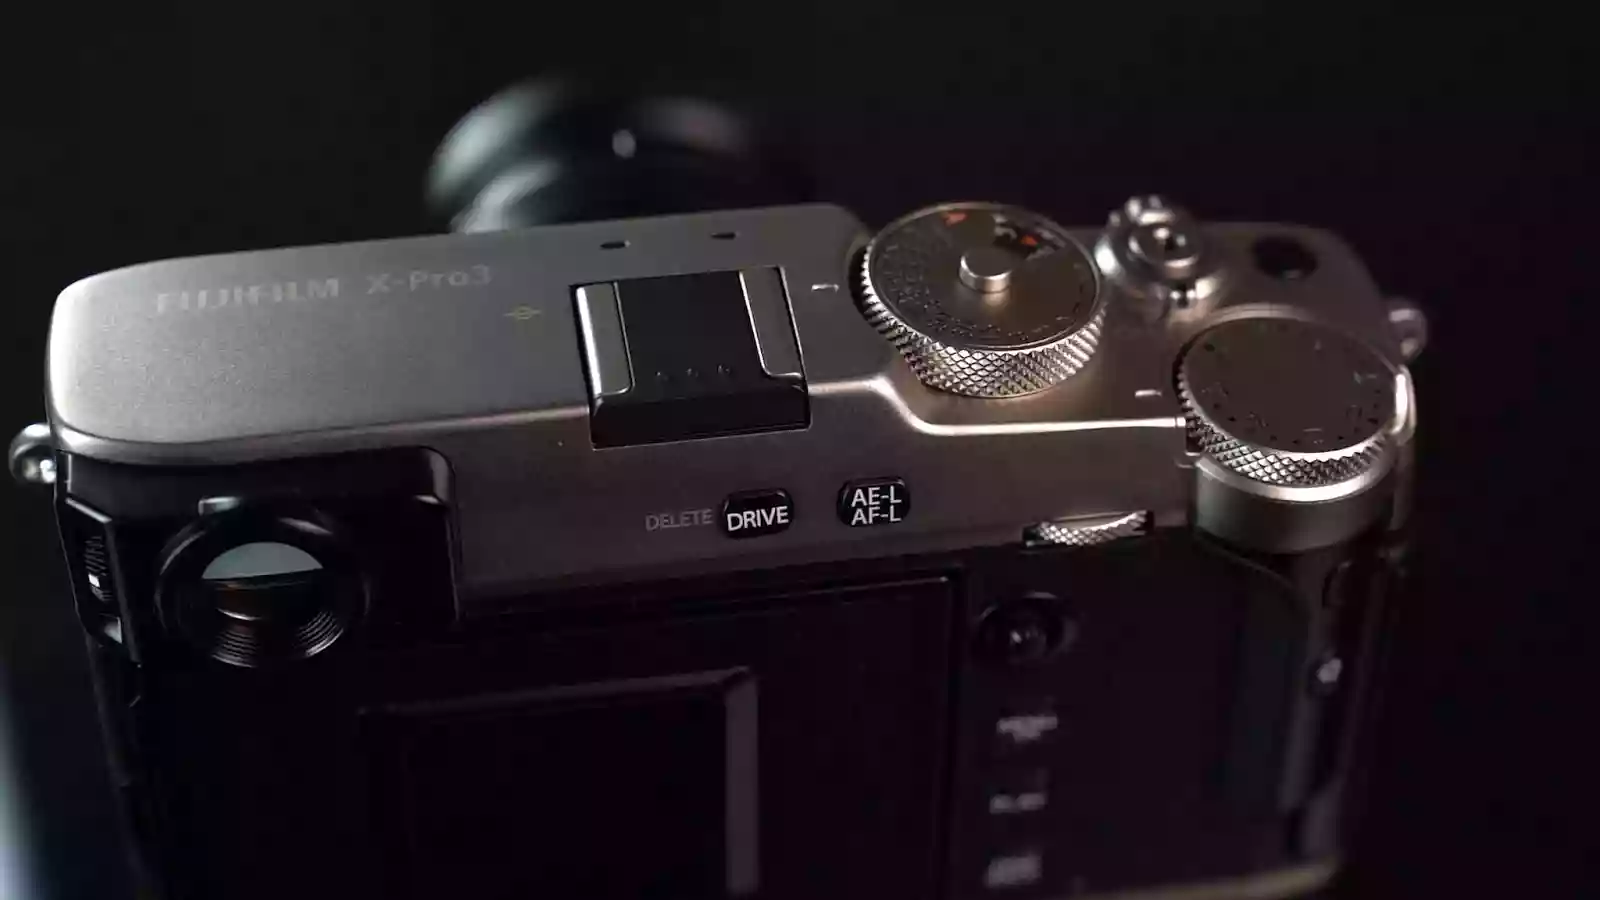 Top plate of the Fujifilm X-Pro 3